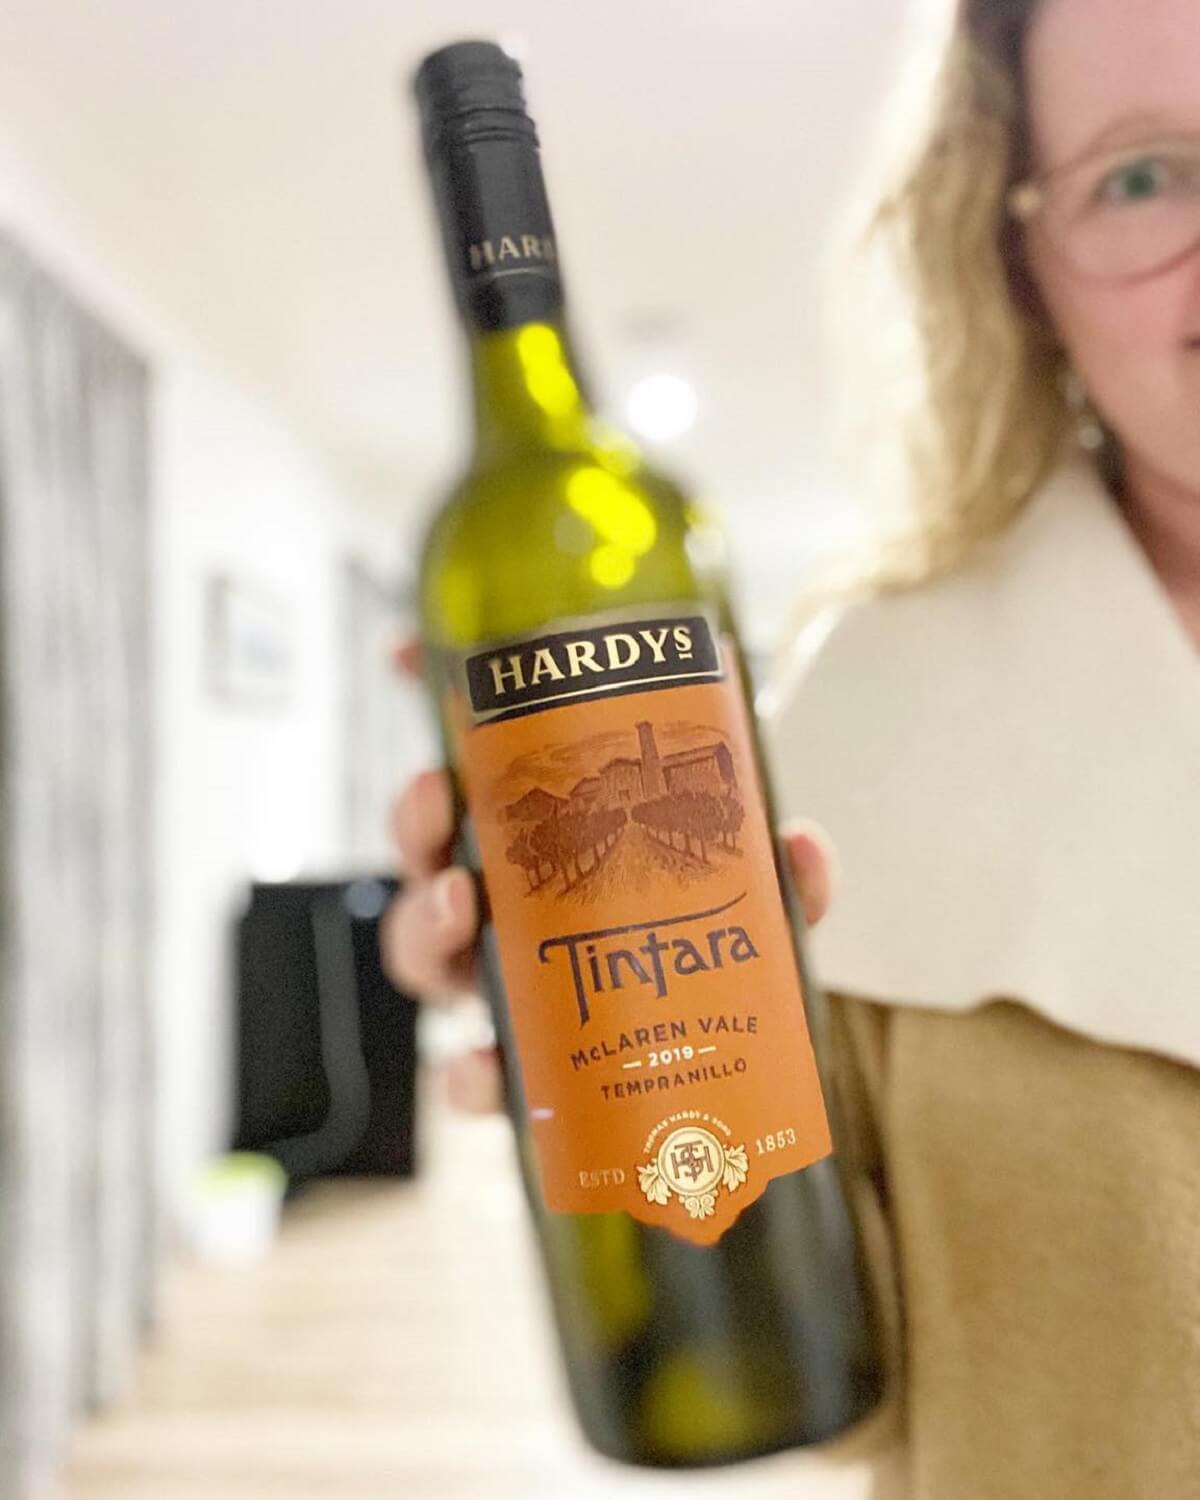 Hardys Wines Tintara 2019 Tempranillo